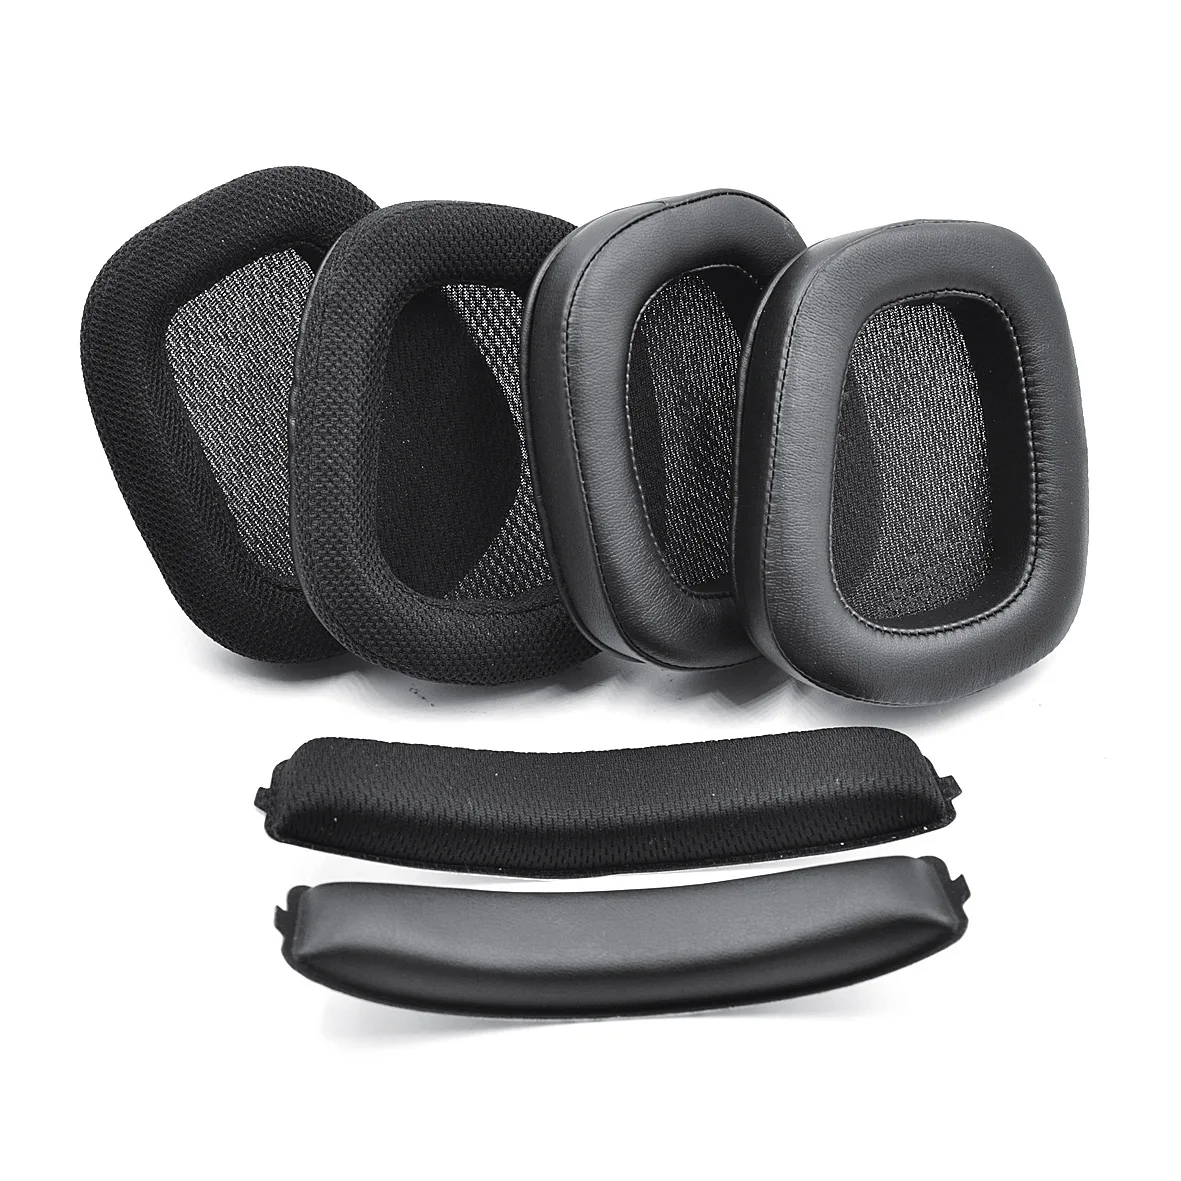 Replacement Earmuff earpads Cup Cover Cushion Ear Pads Headband for Logitech G933 G633 G633 933 Artemis Headphones